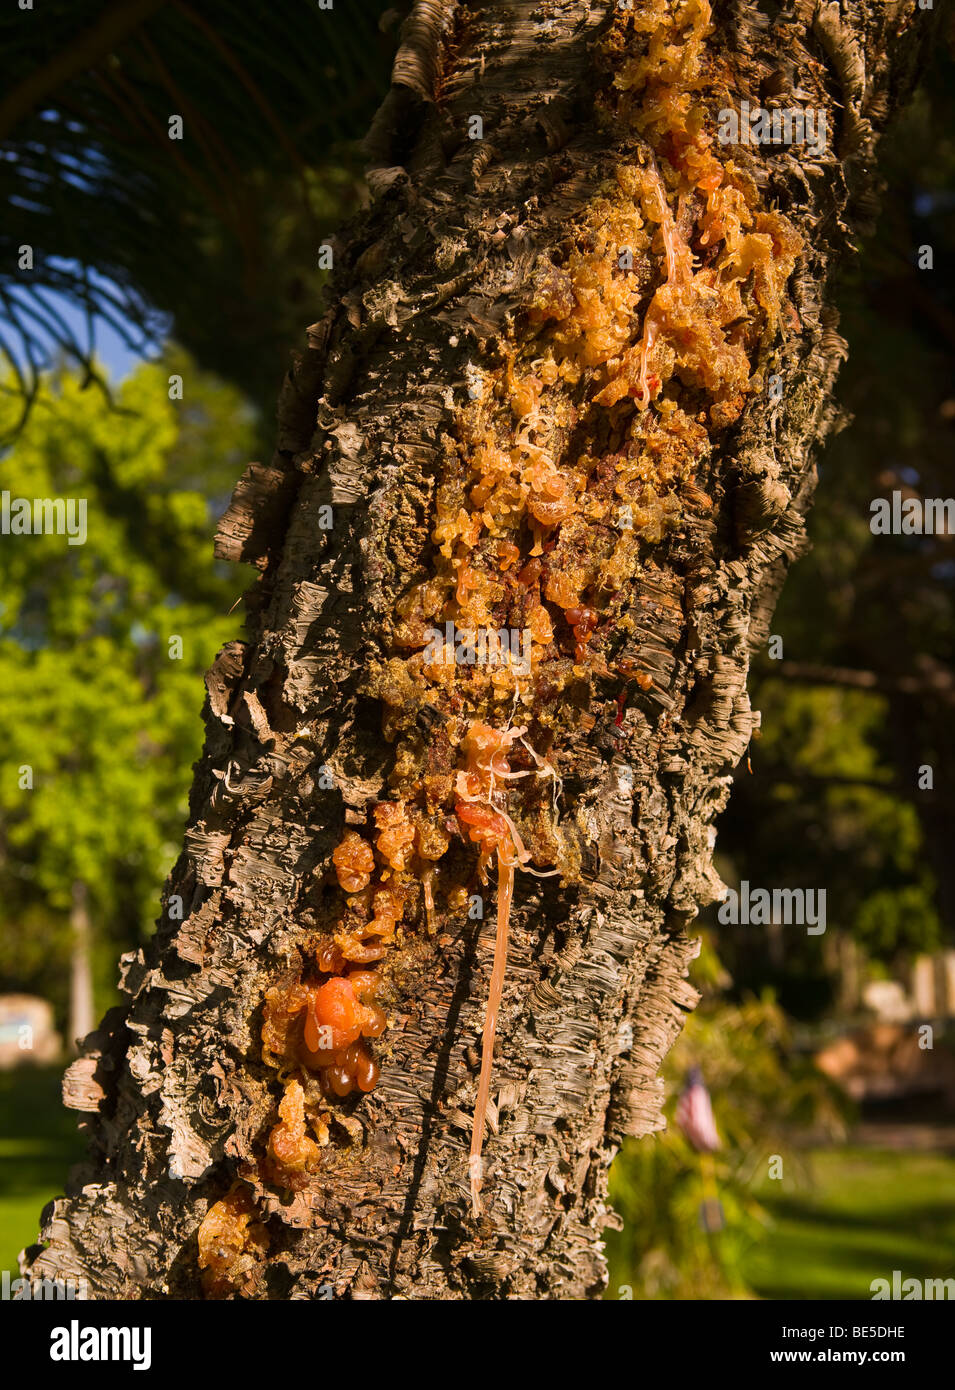 Exudado de savia de árbol fotografías e imágenes de alta resolución - Alamy